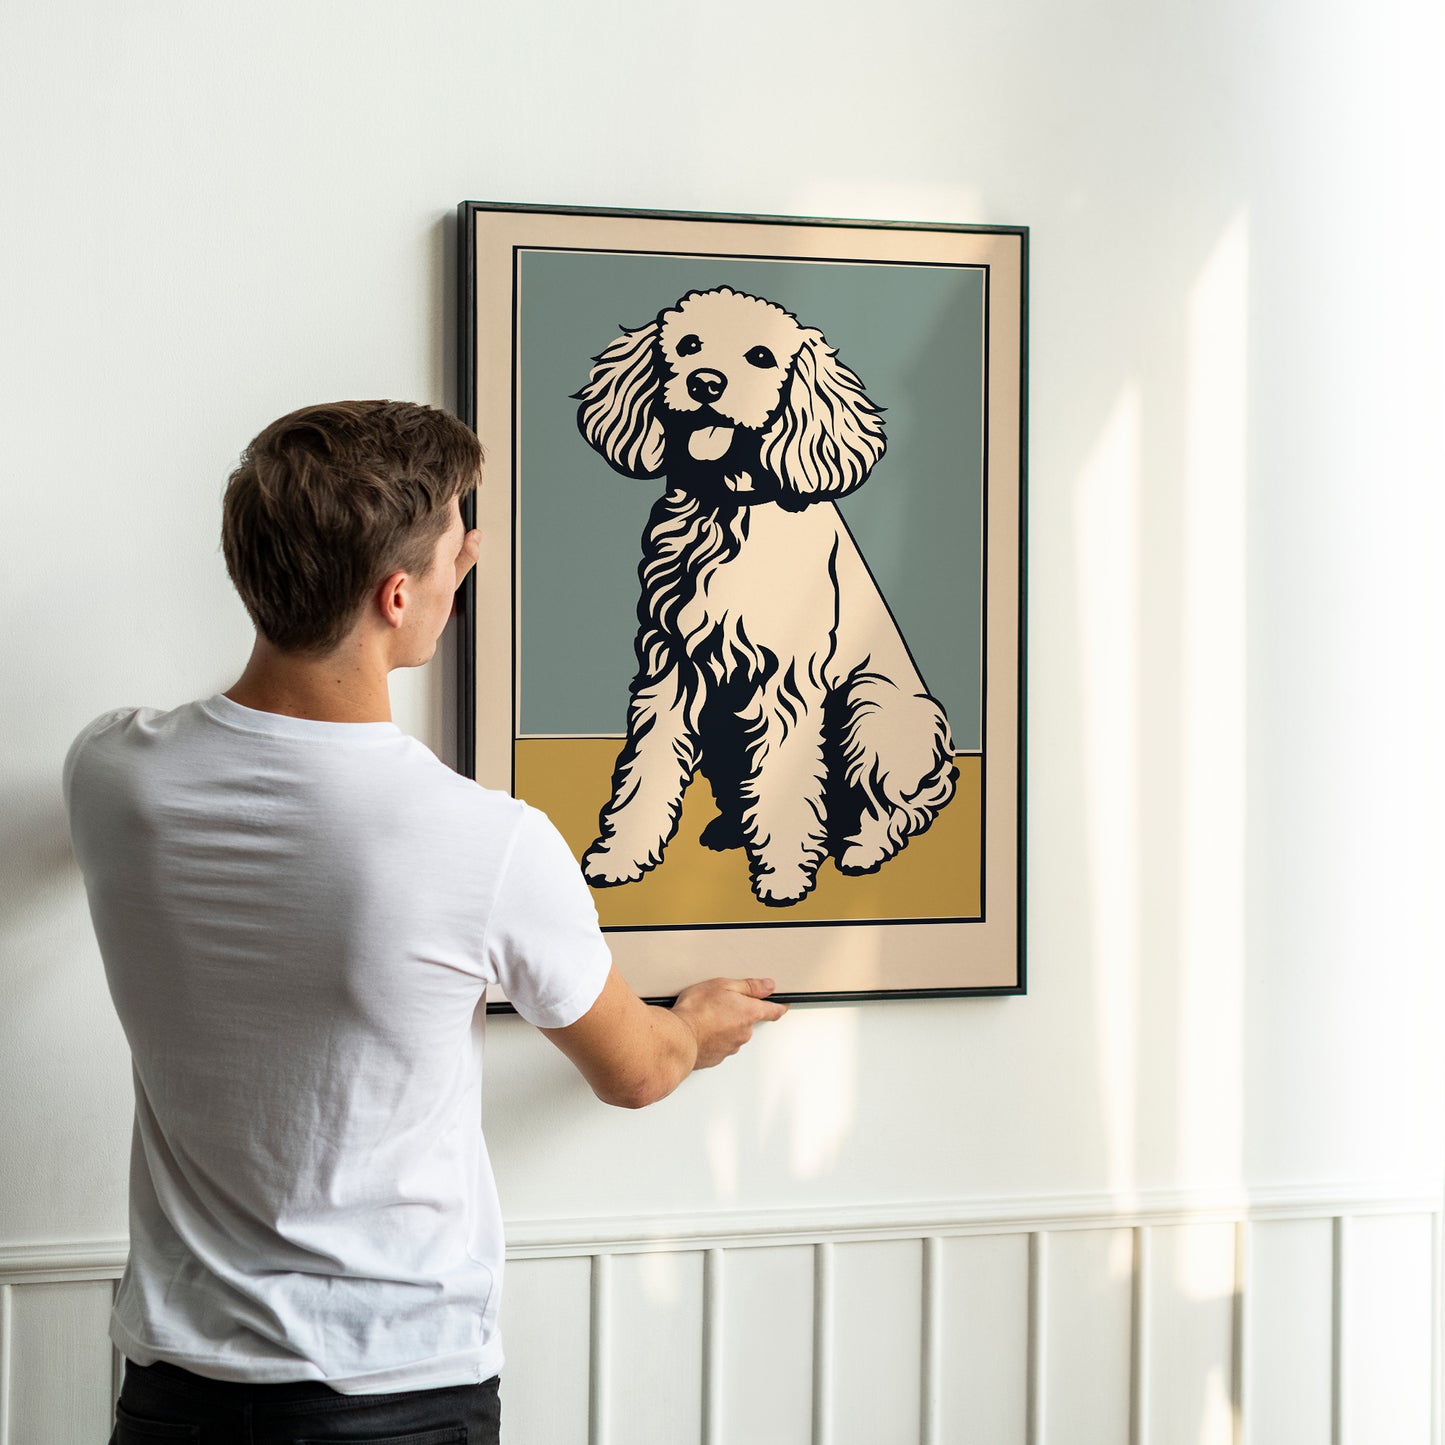 Retro Poodle Dog Poster